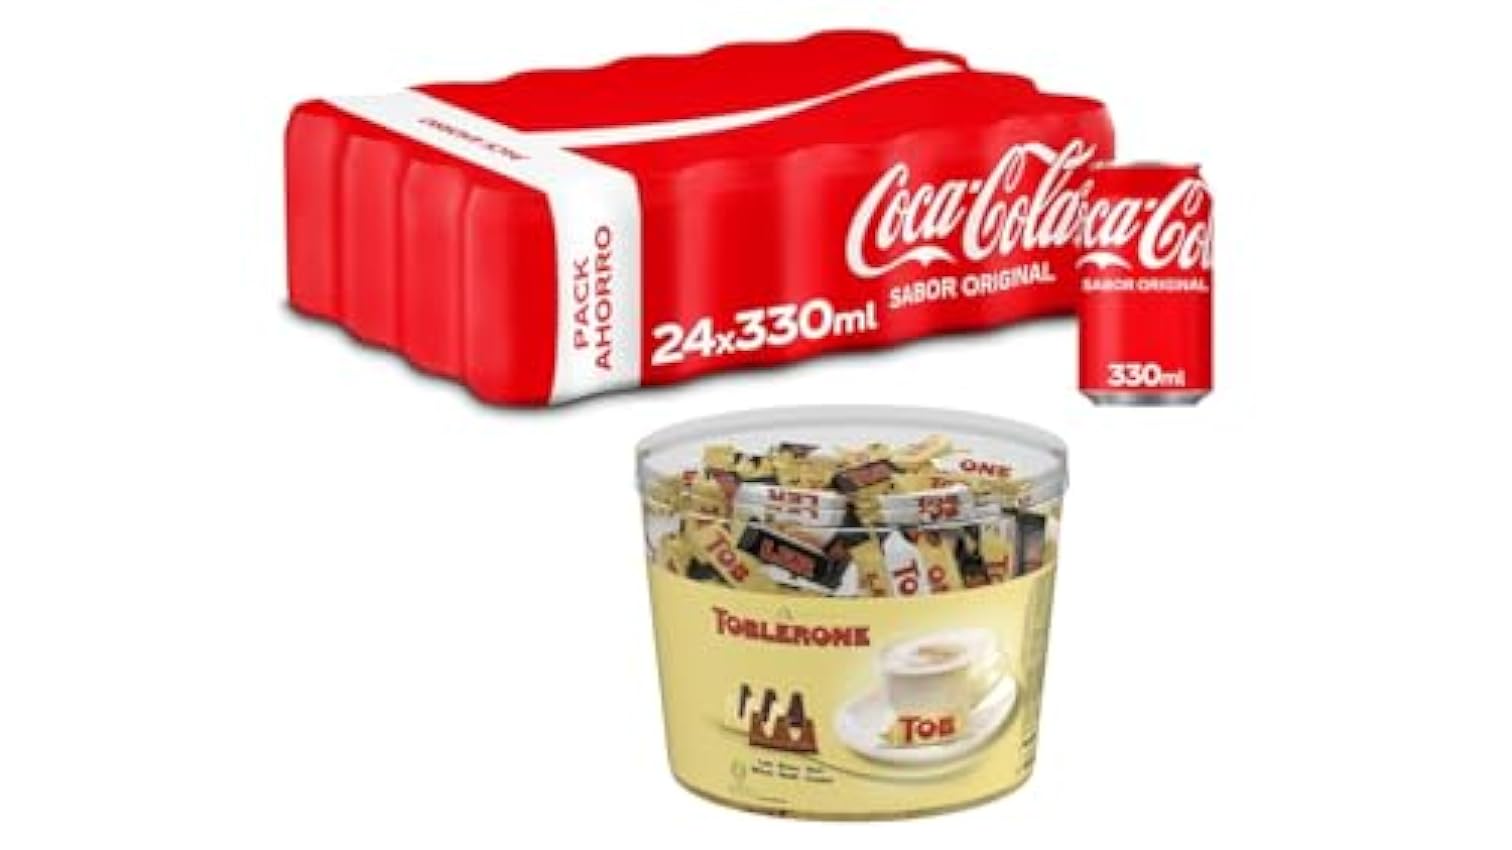 Coca-Cola Sabor Original, Pack de 24 latas de 330ml + T